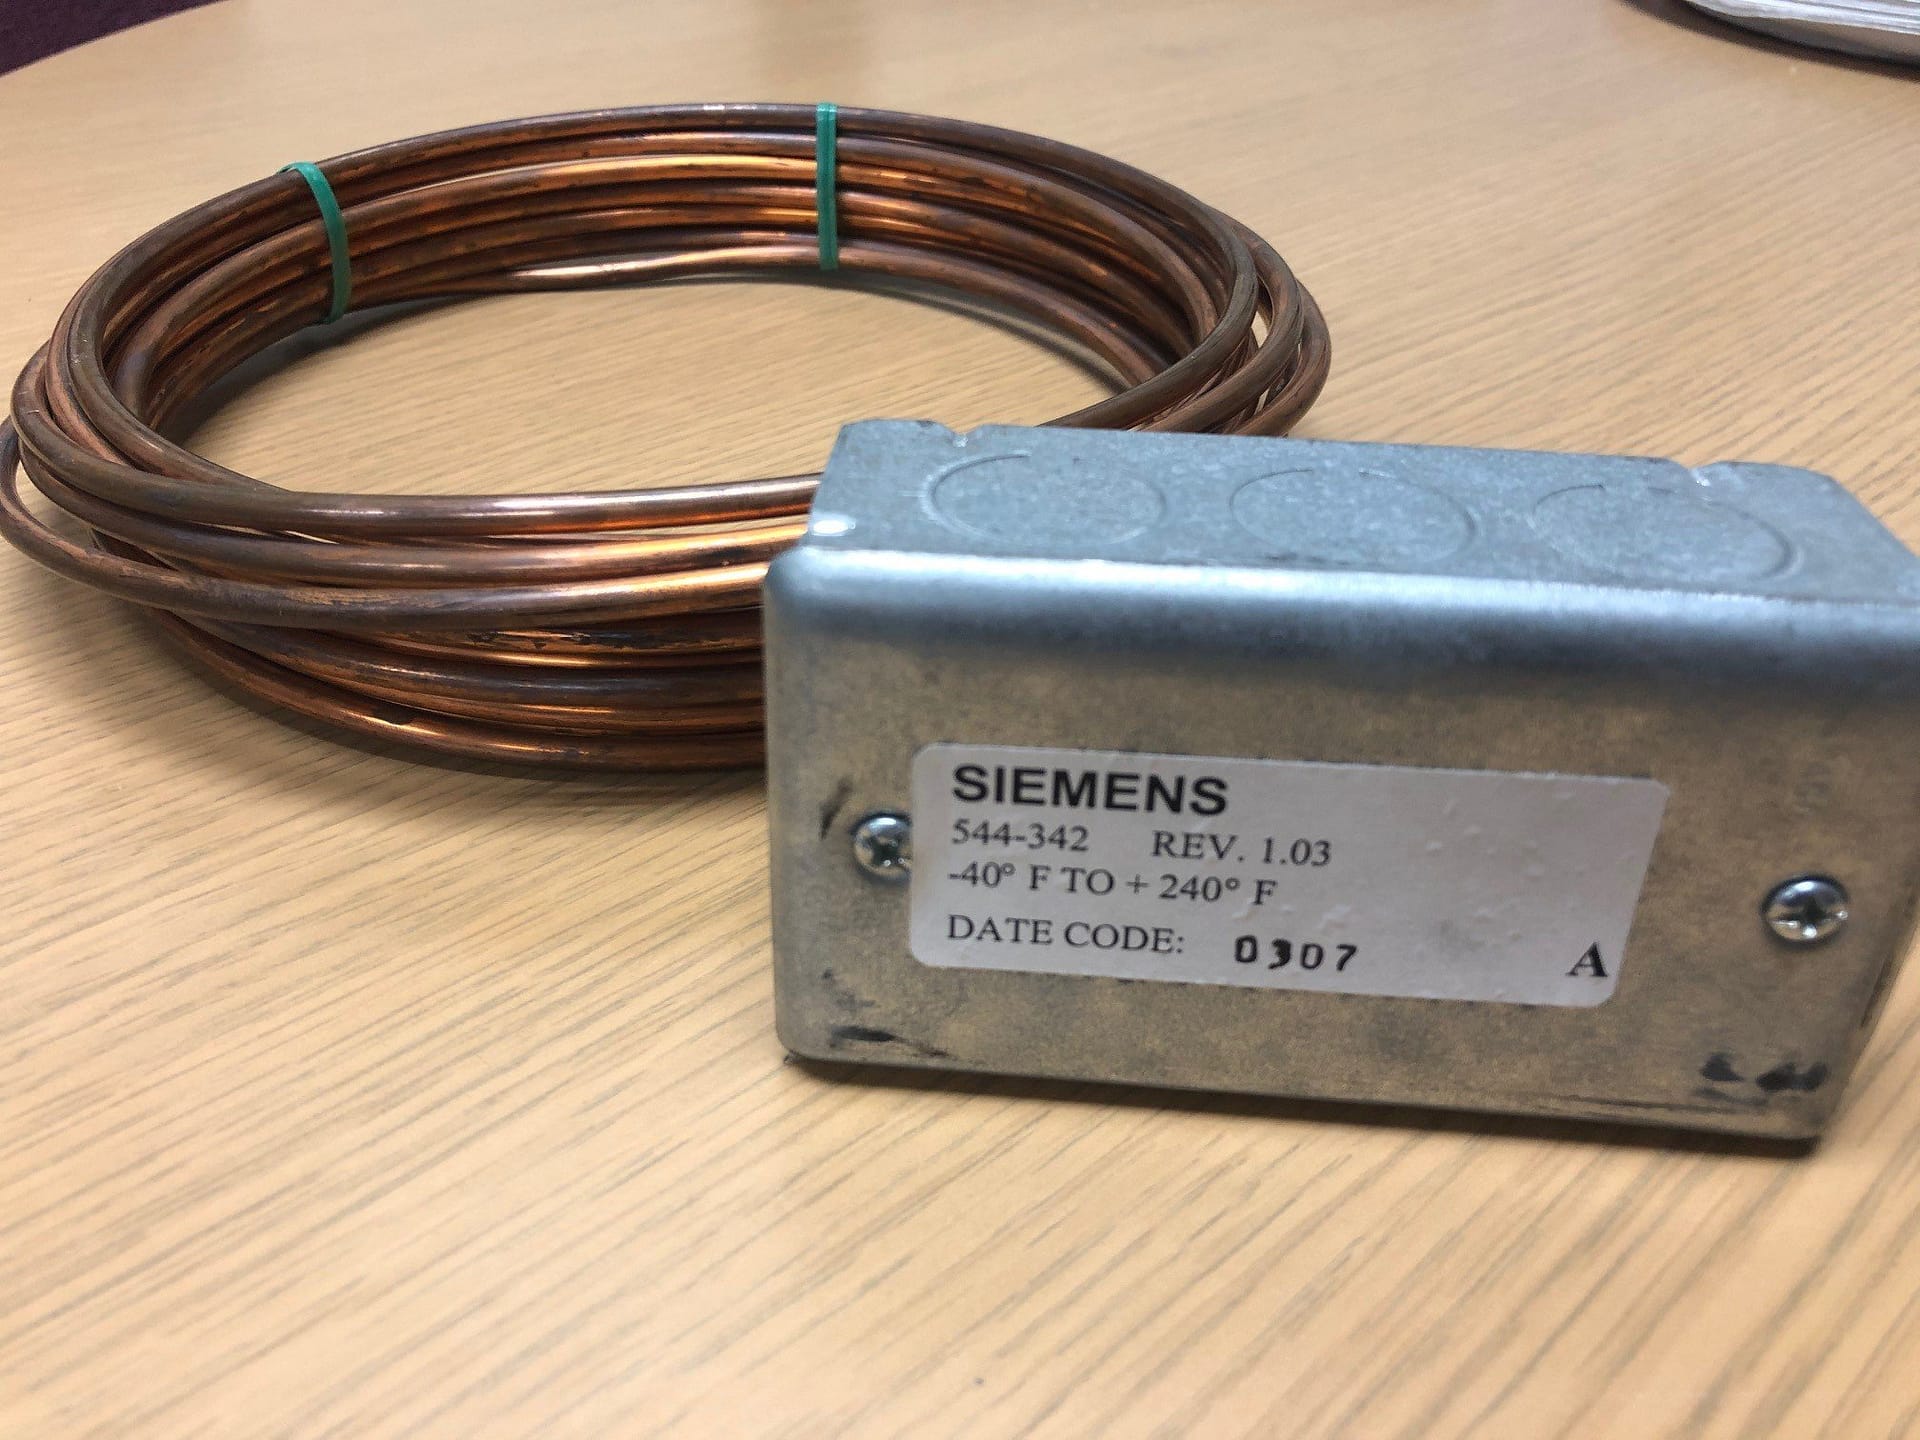 Siemens 544-342